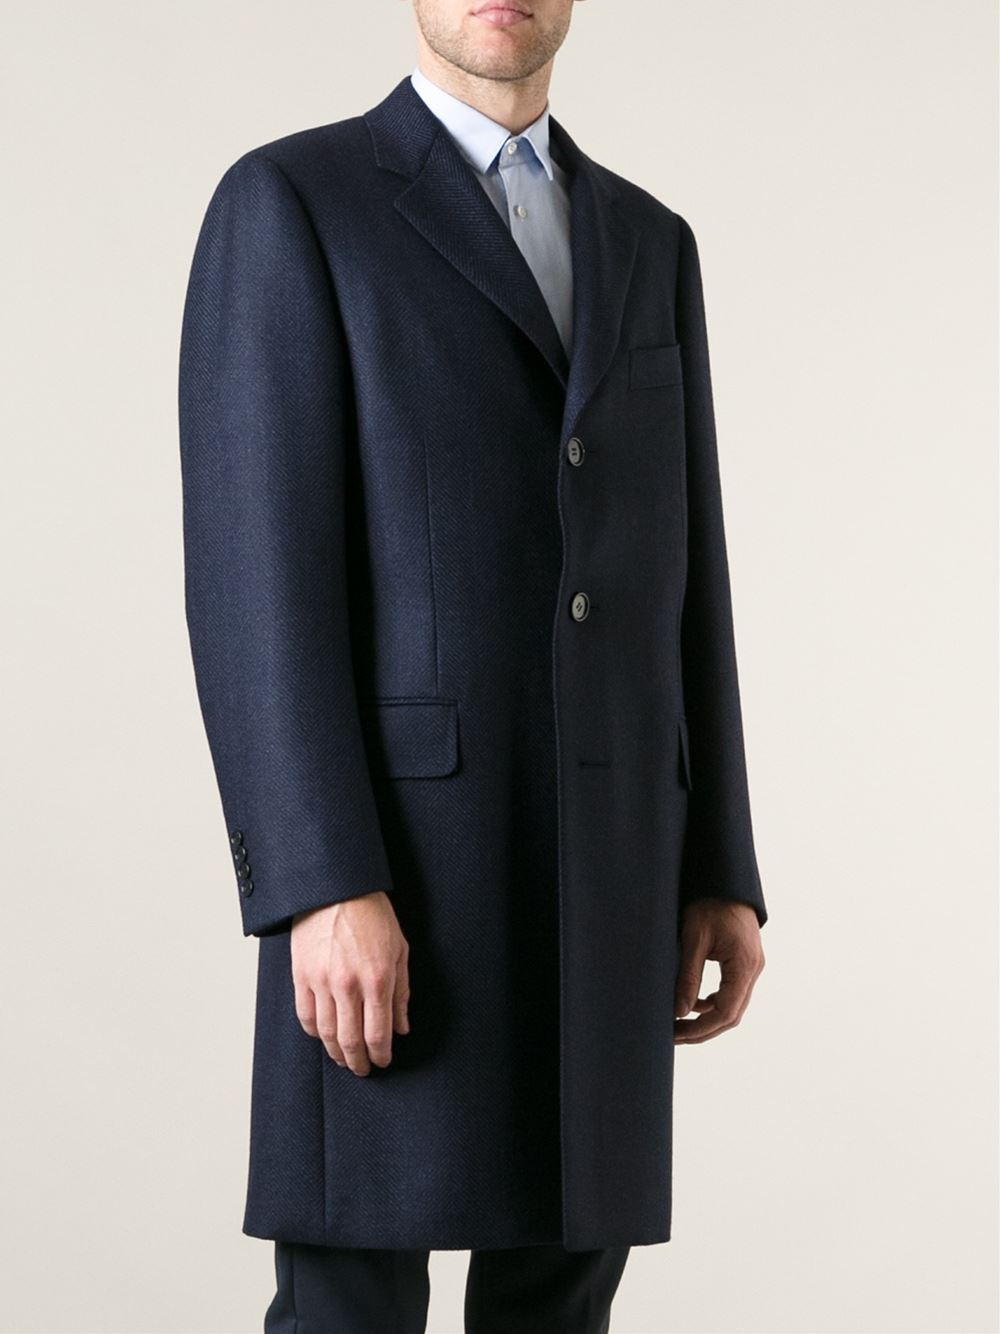 Canali Herringbone Overcoat in Blue for Men - Lyst